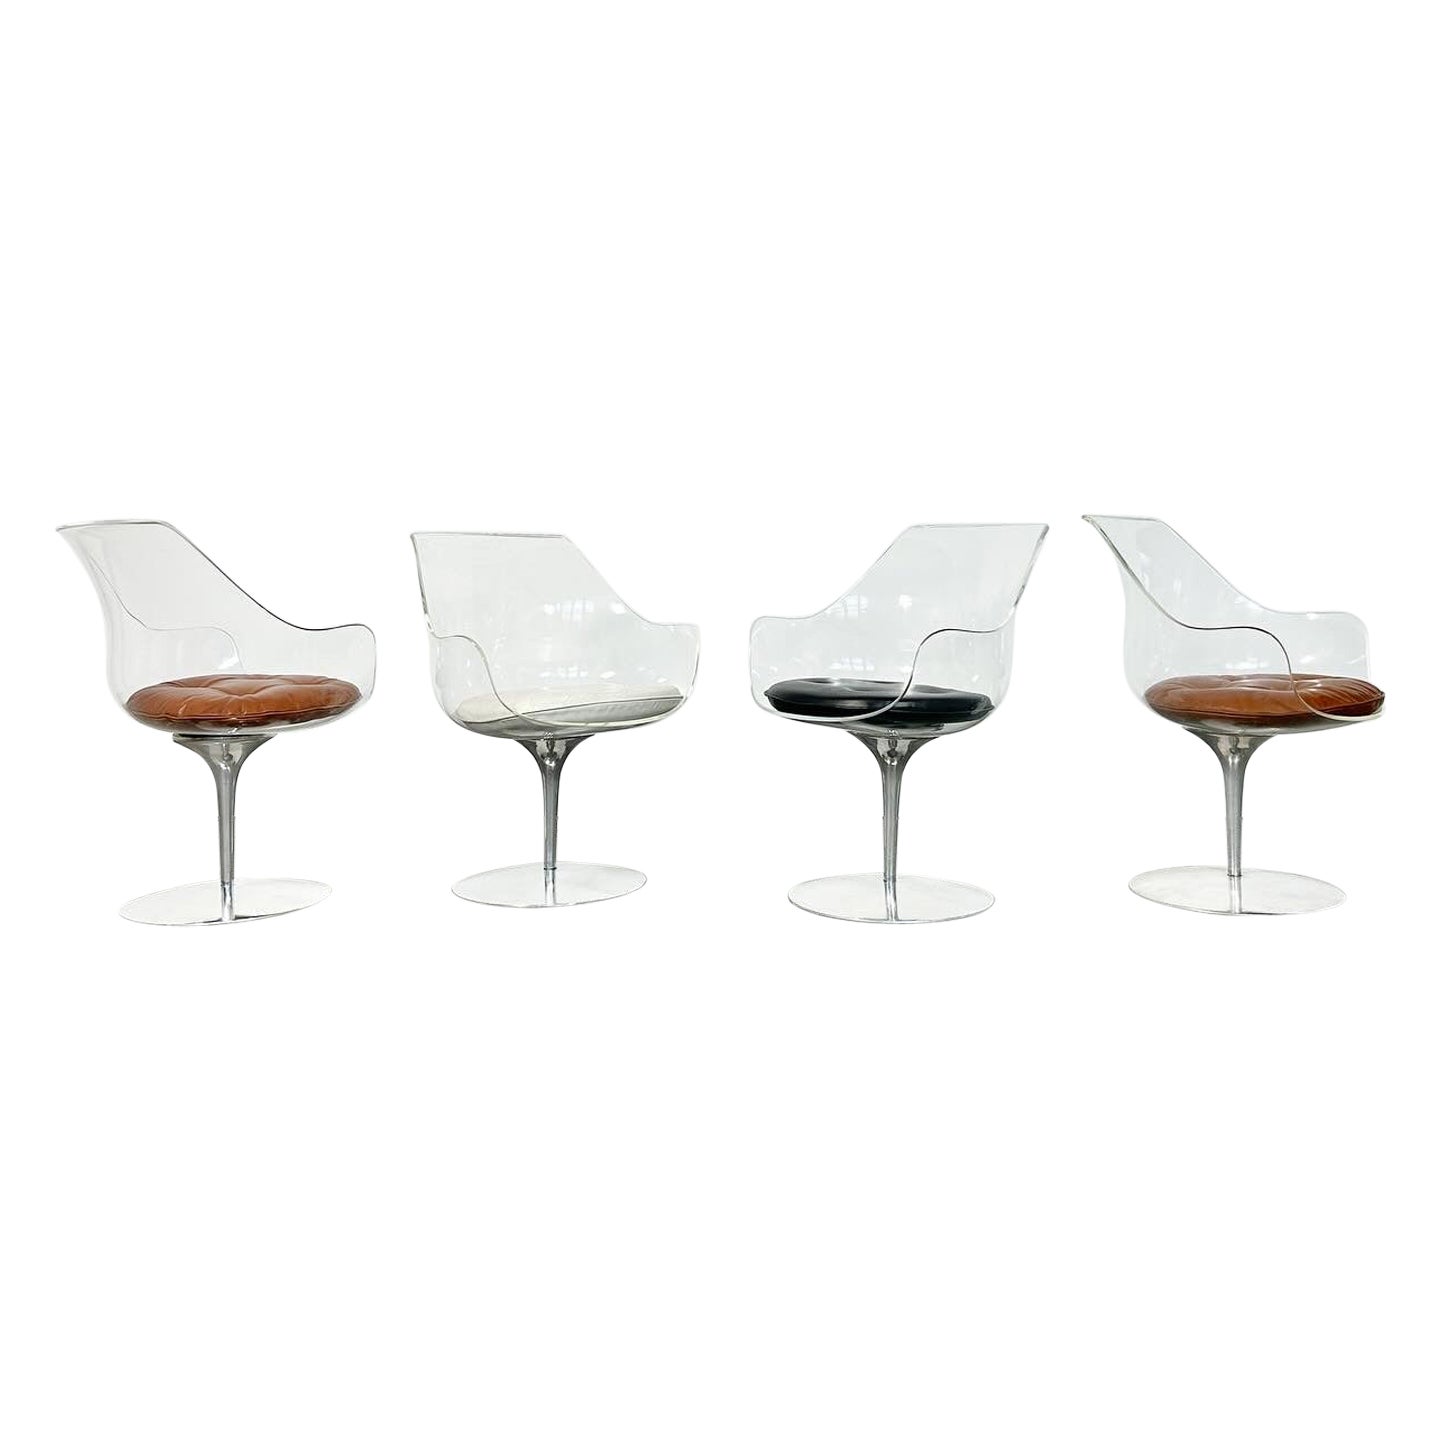 Set of four Champagne chair by Estelle & Erwine Laverne for Formes Nouvelles